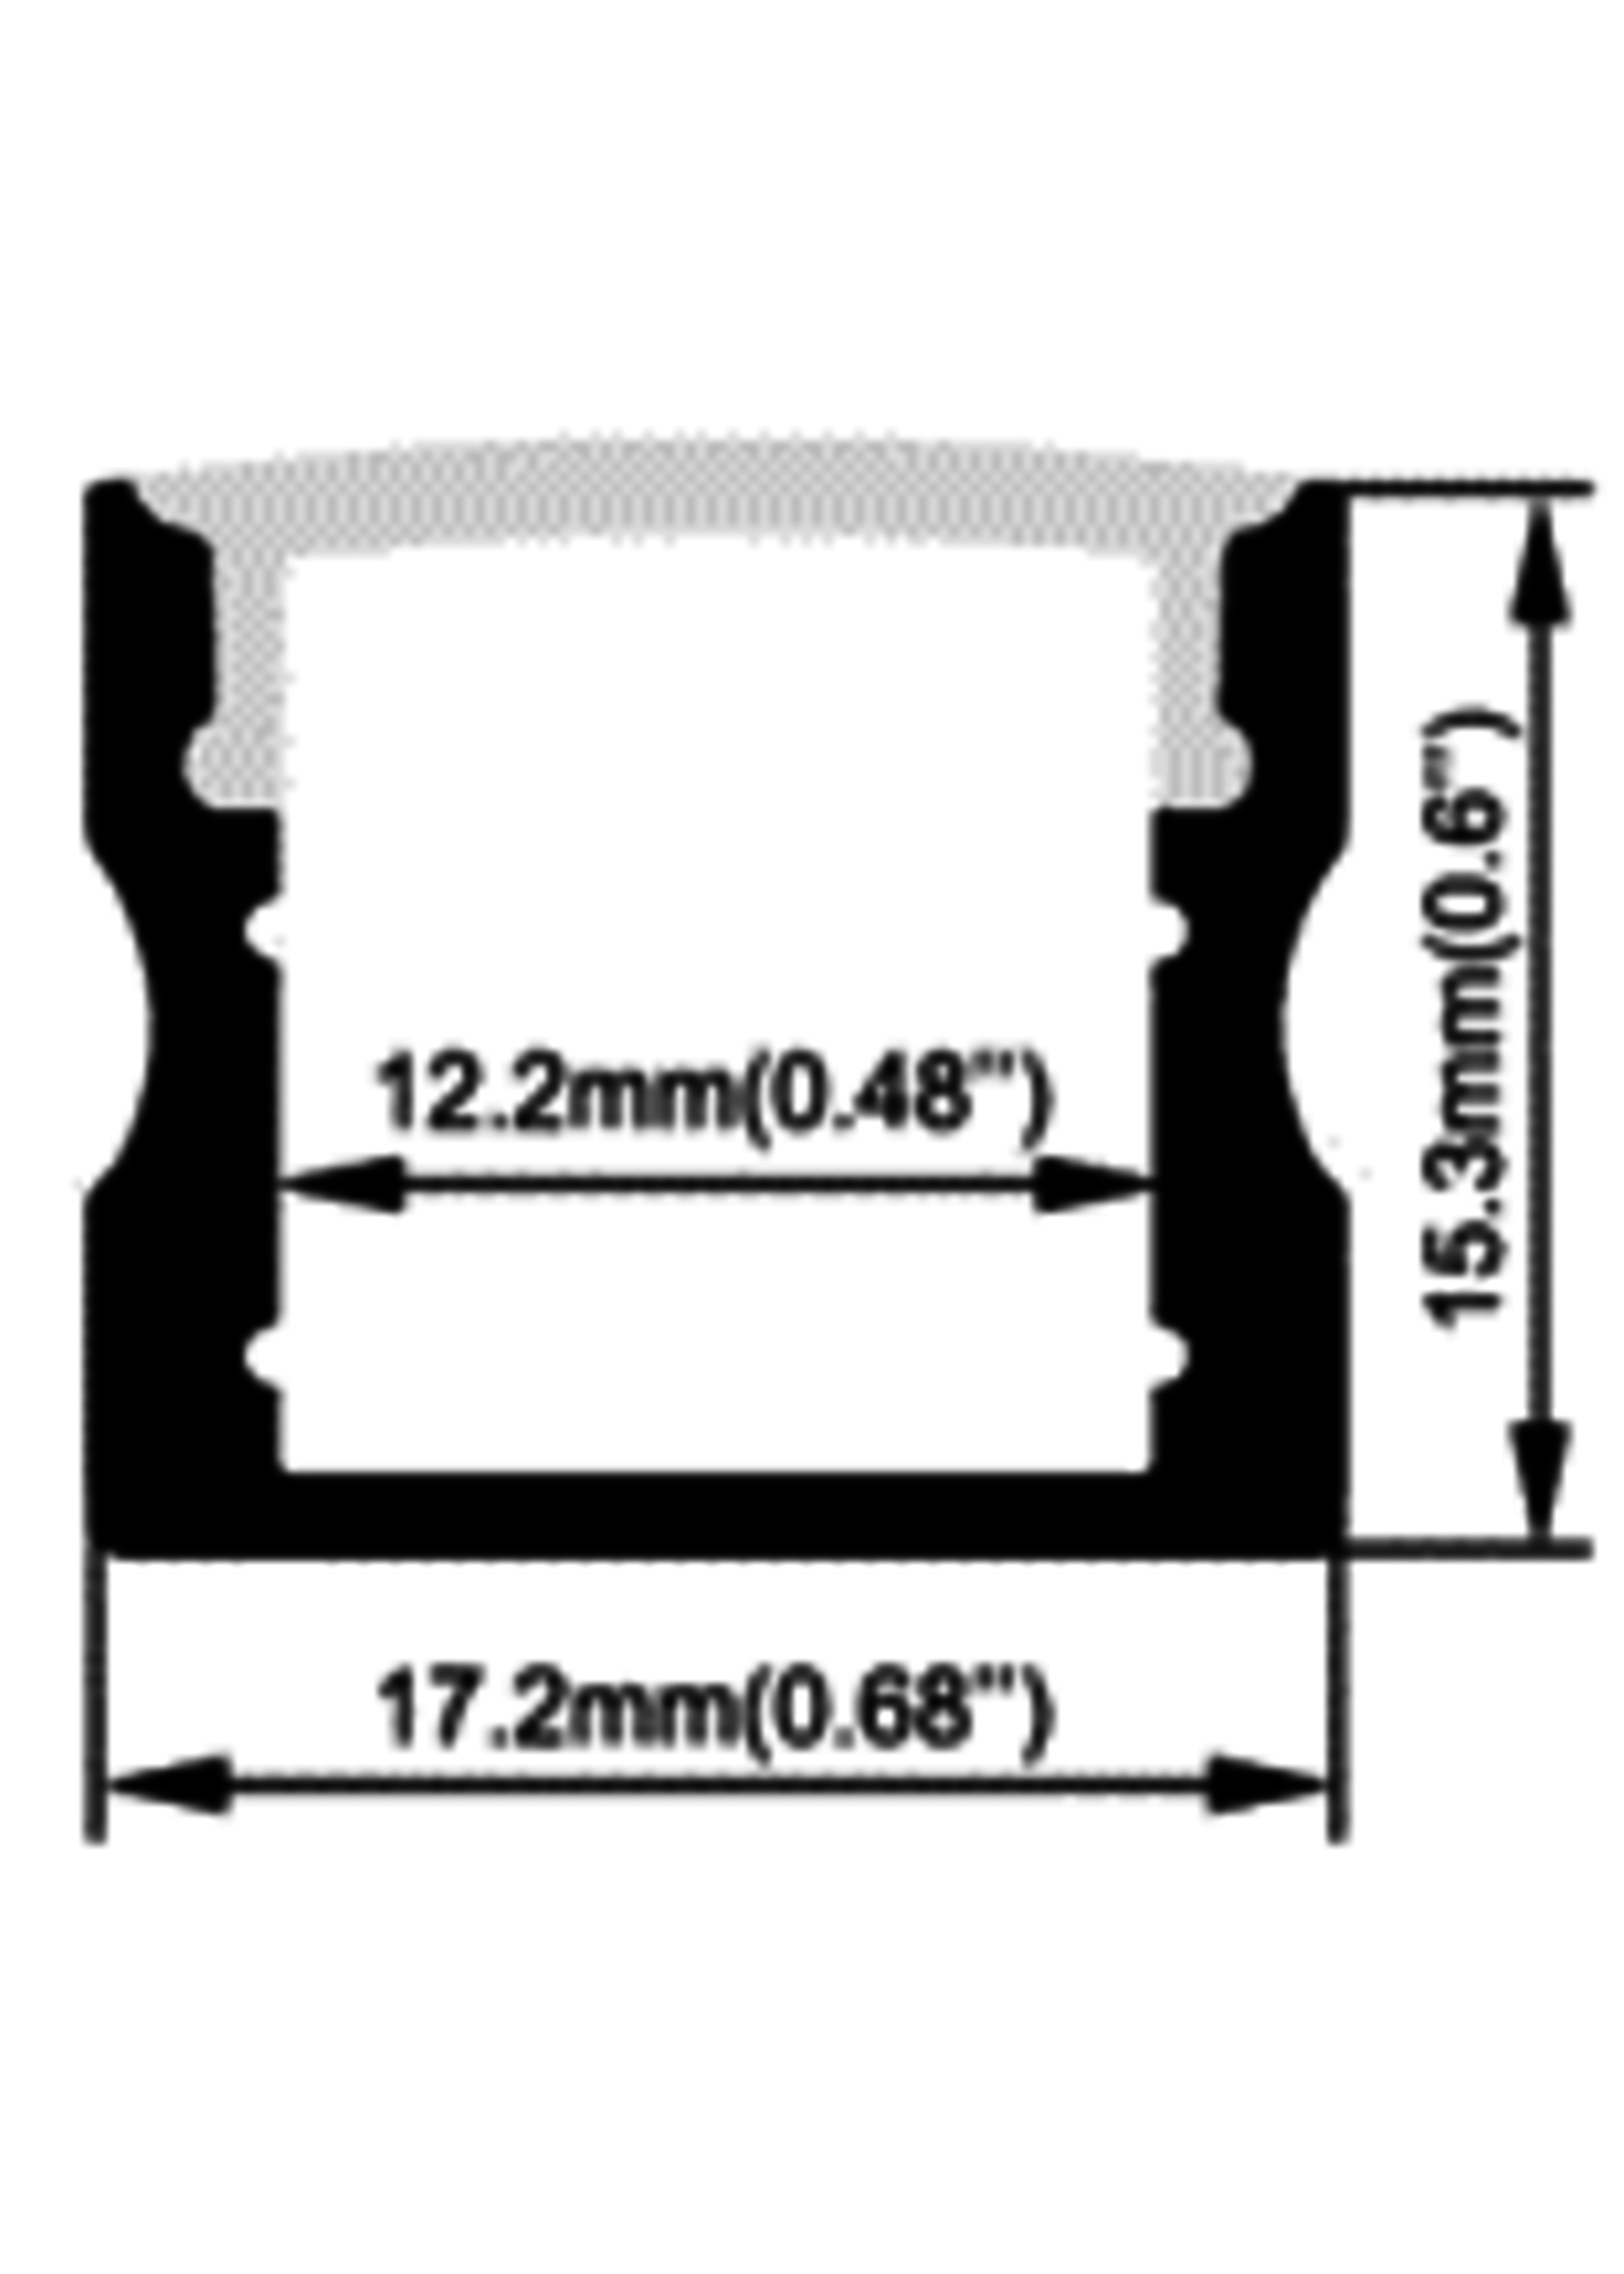 LUMBRA ALUMINUM CHANNEL 2 MTS  17.2*15.3mm